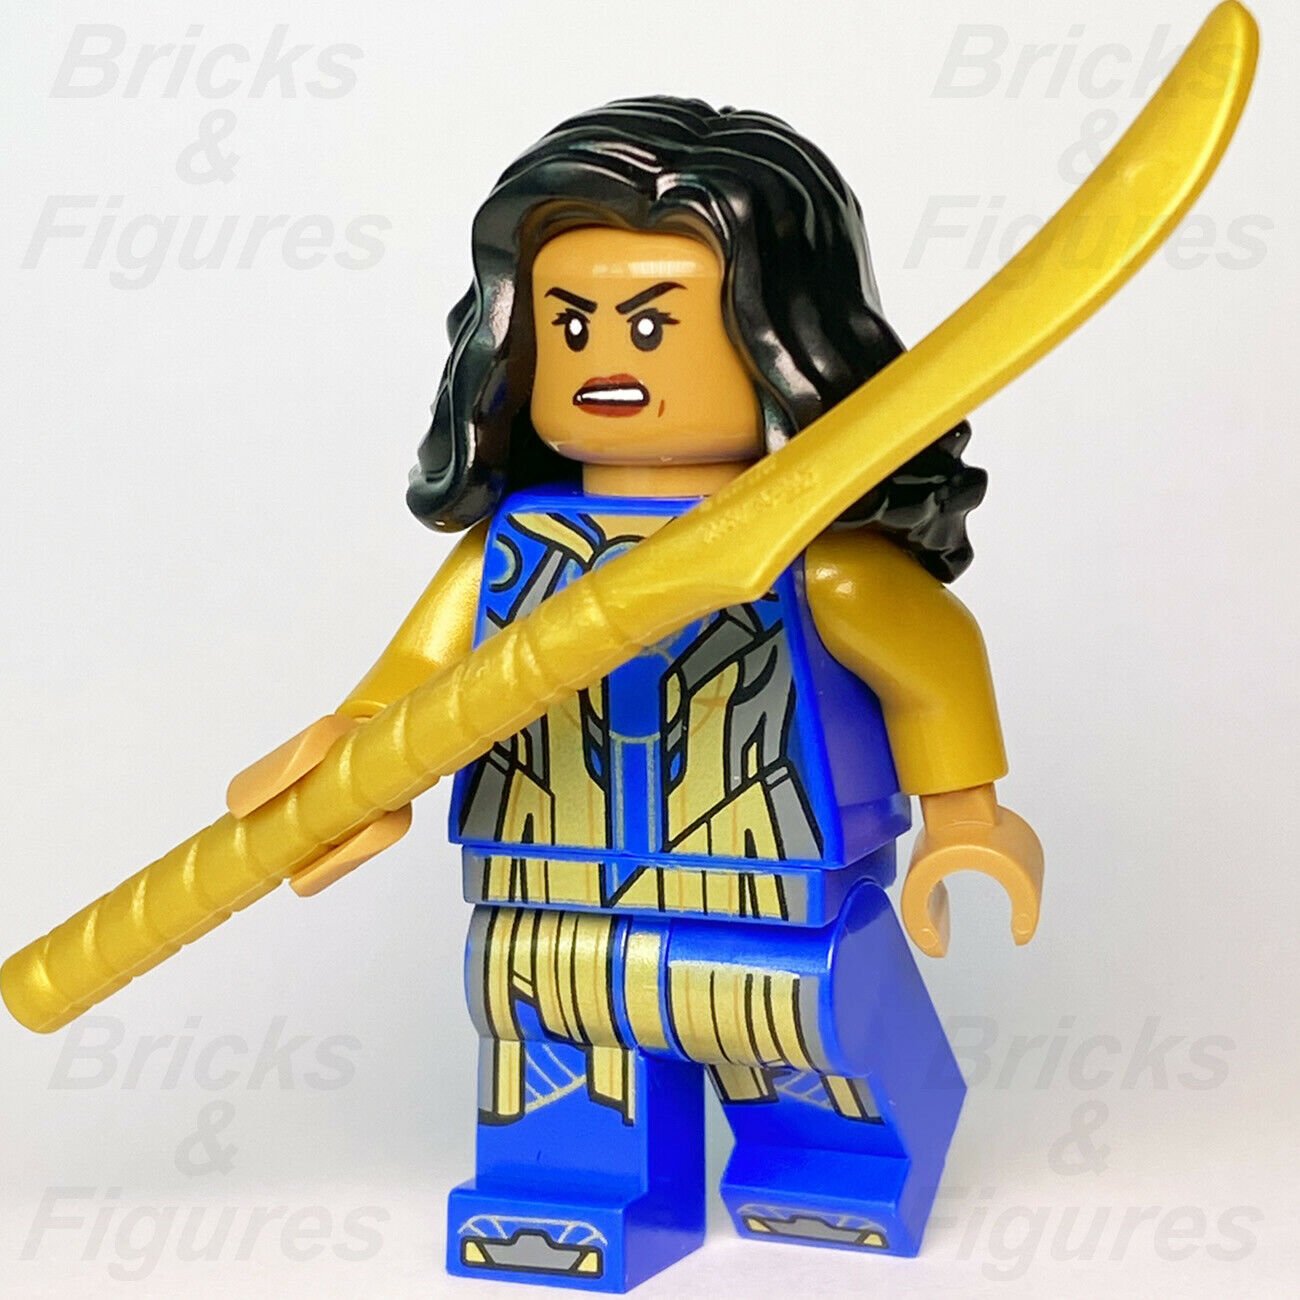 New Marvel Super Heroes LEGO Ajak Prime Eternals Leader Minifigure 76155 sh762 - Bricks & Figures